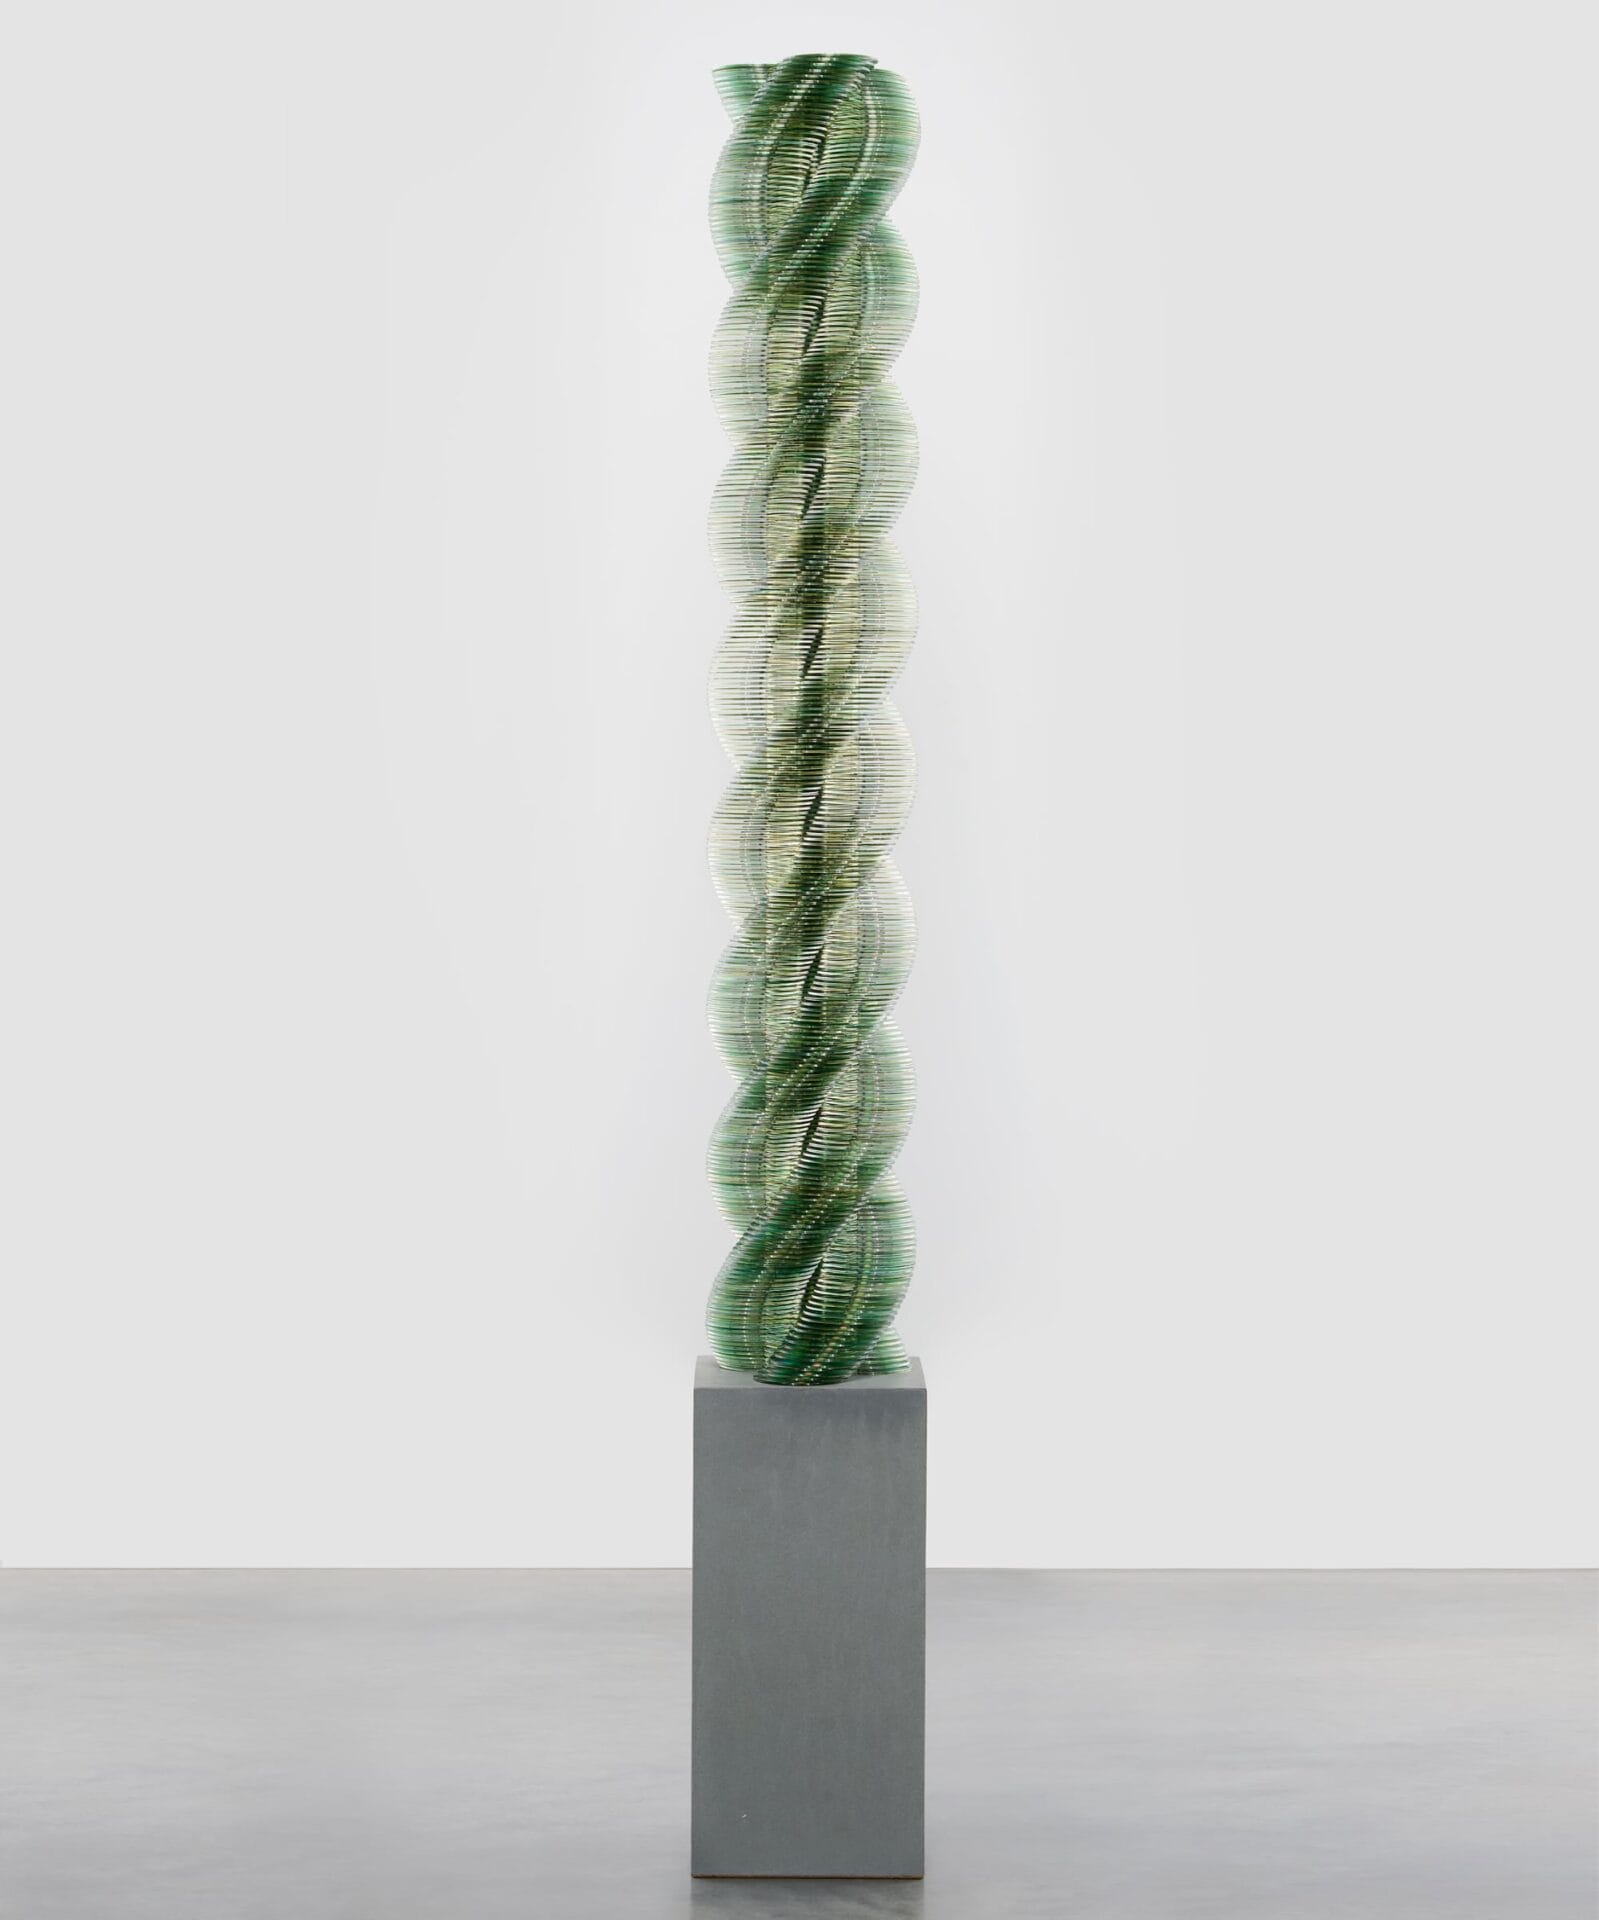 a twisting green sculpture on a concrete pedestal